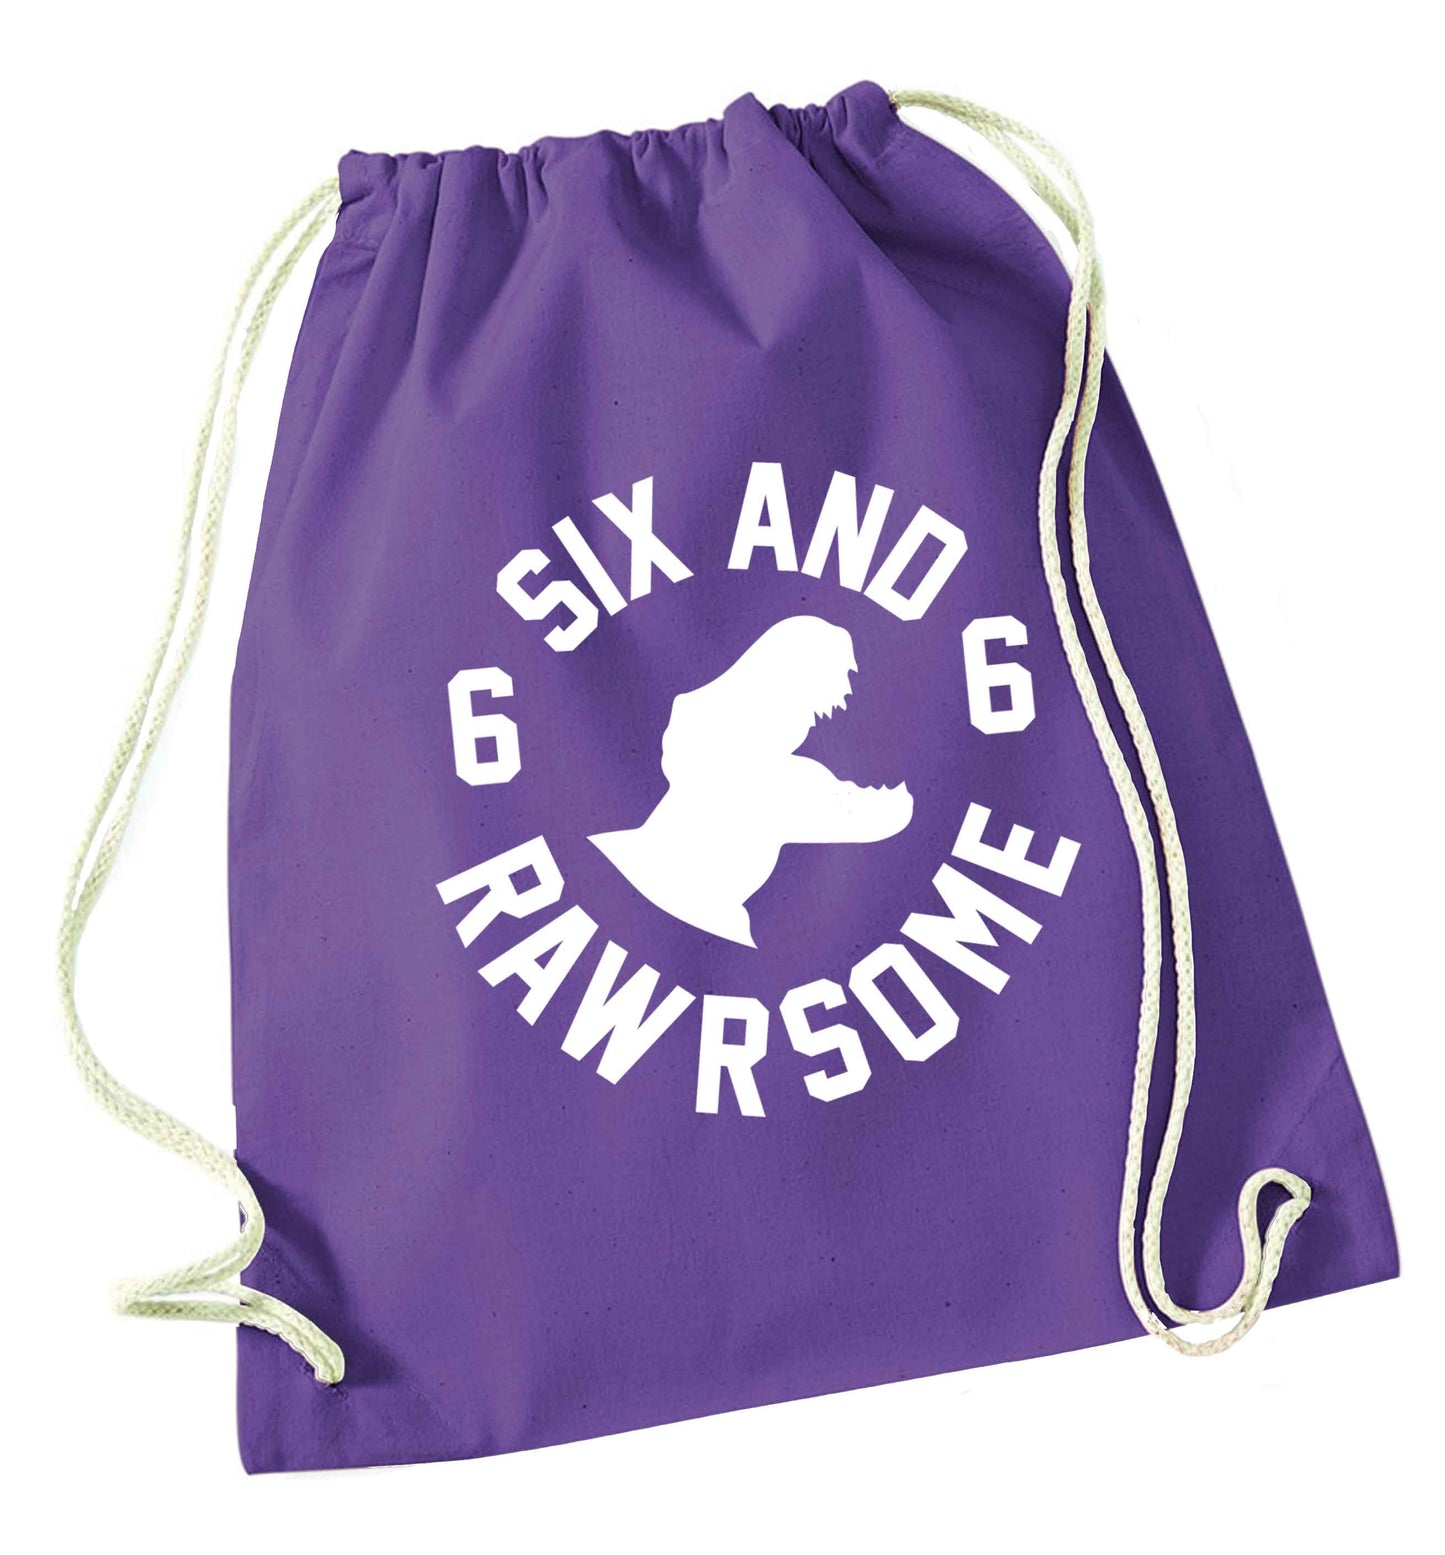 Six and rawrsome purple drawstring bag